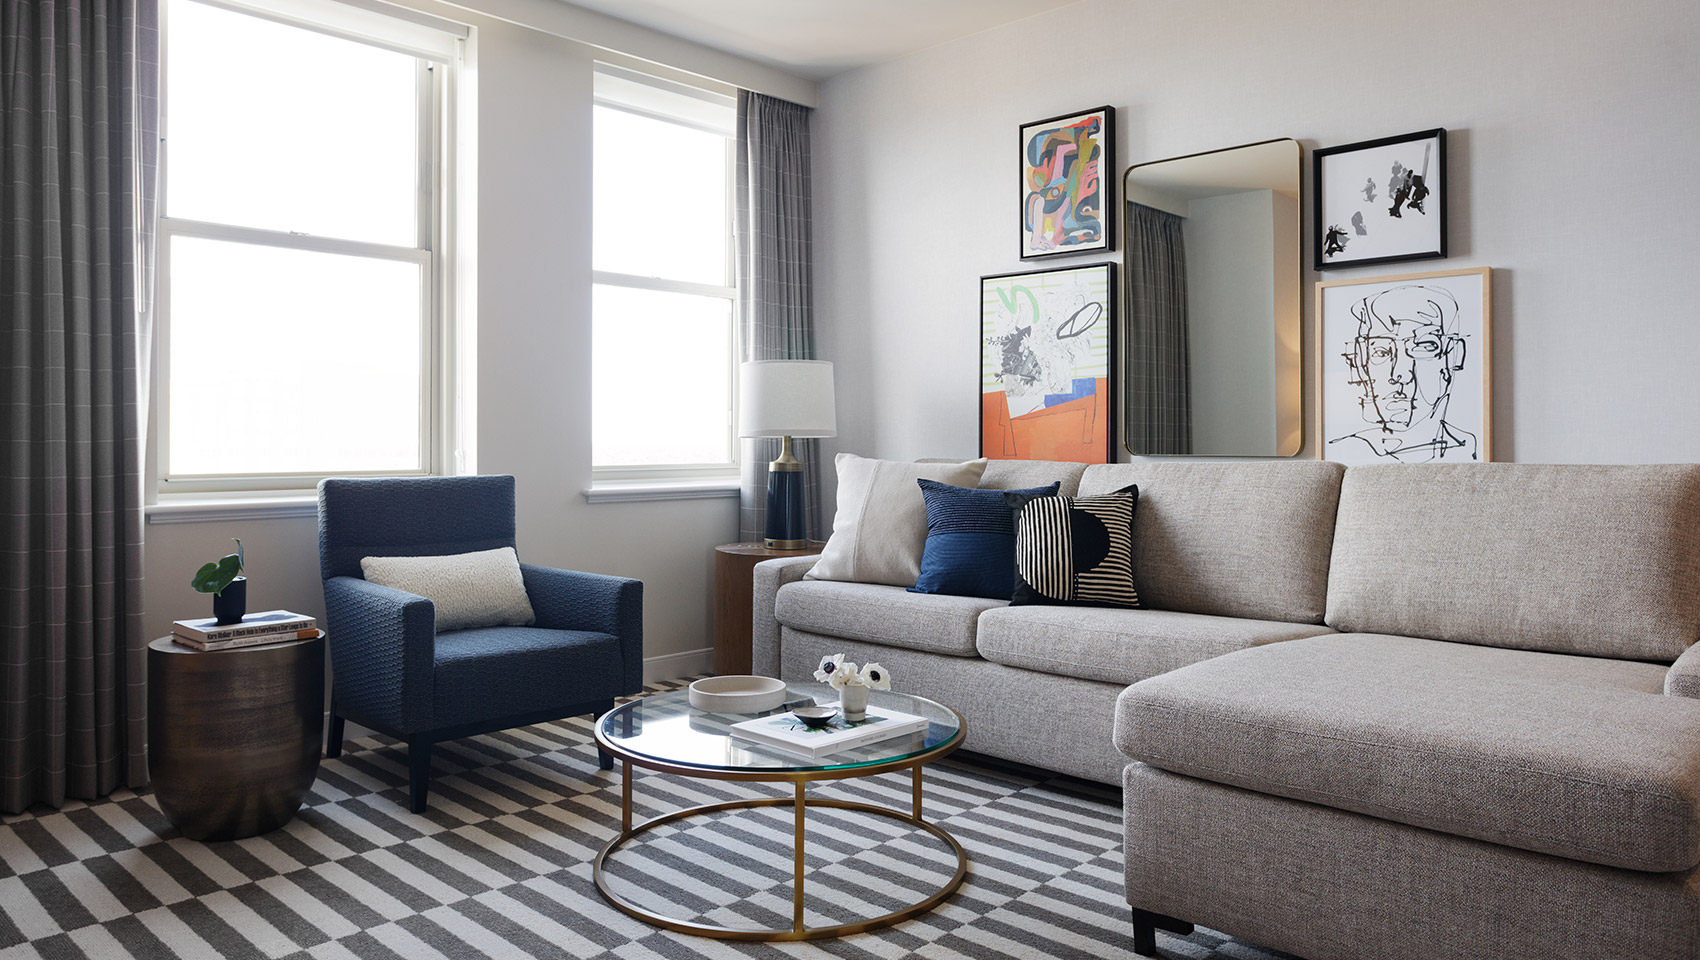 Premium Corner King Suite with spacious living room